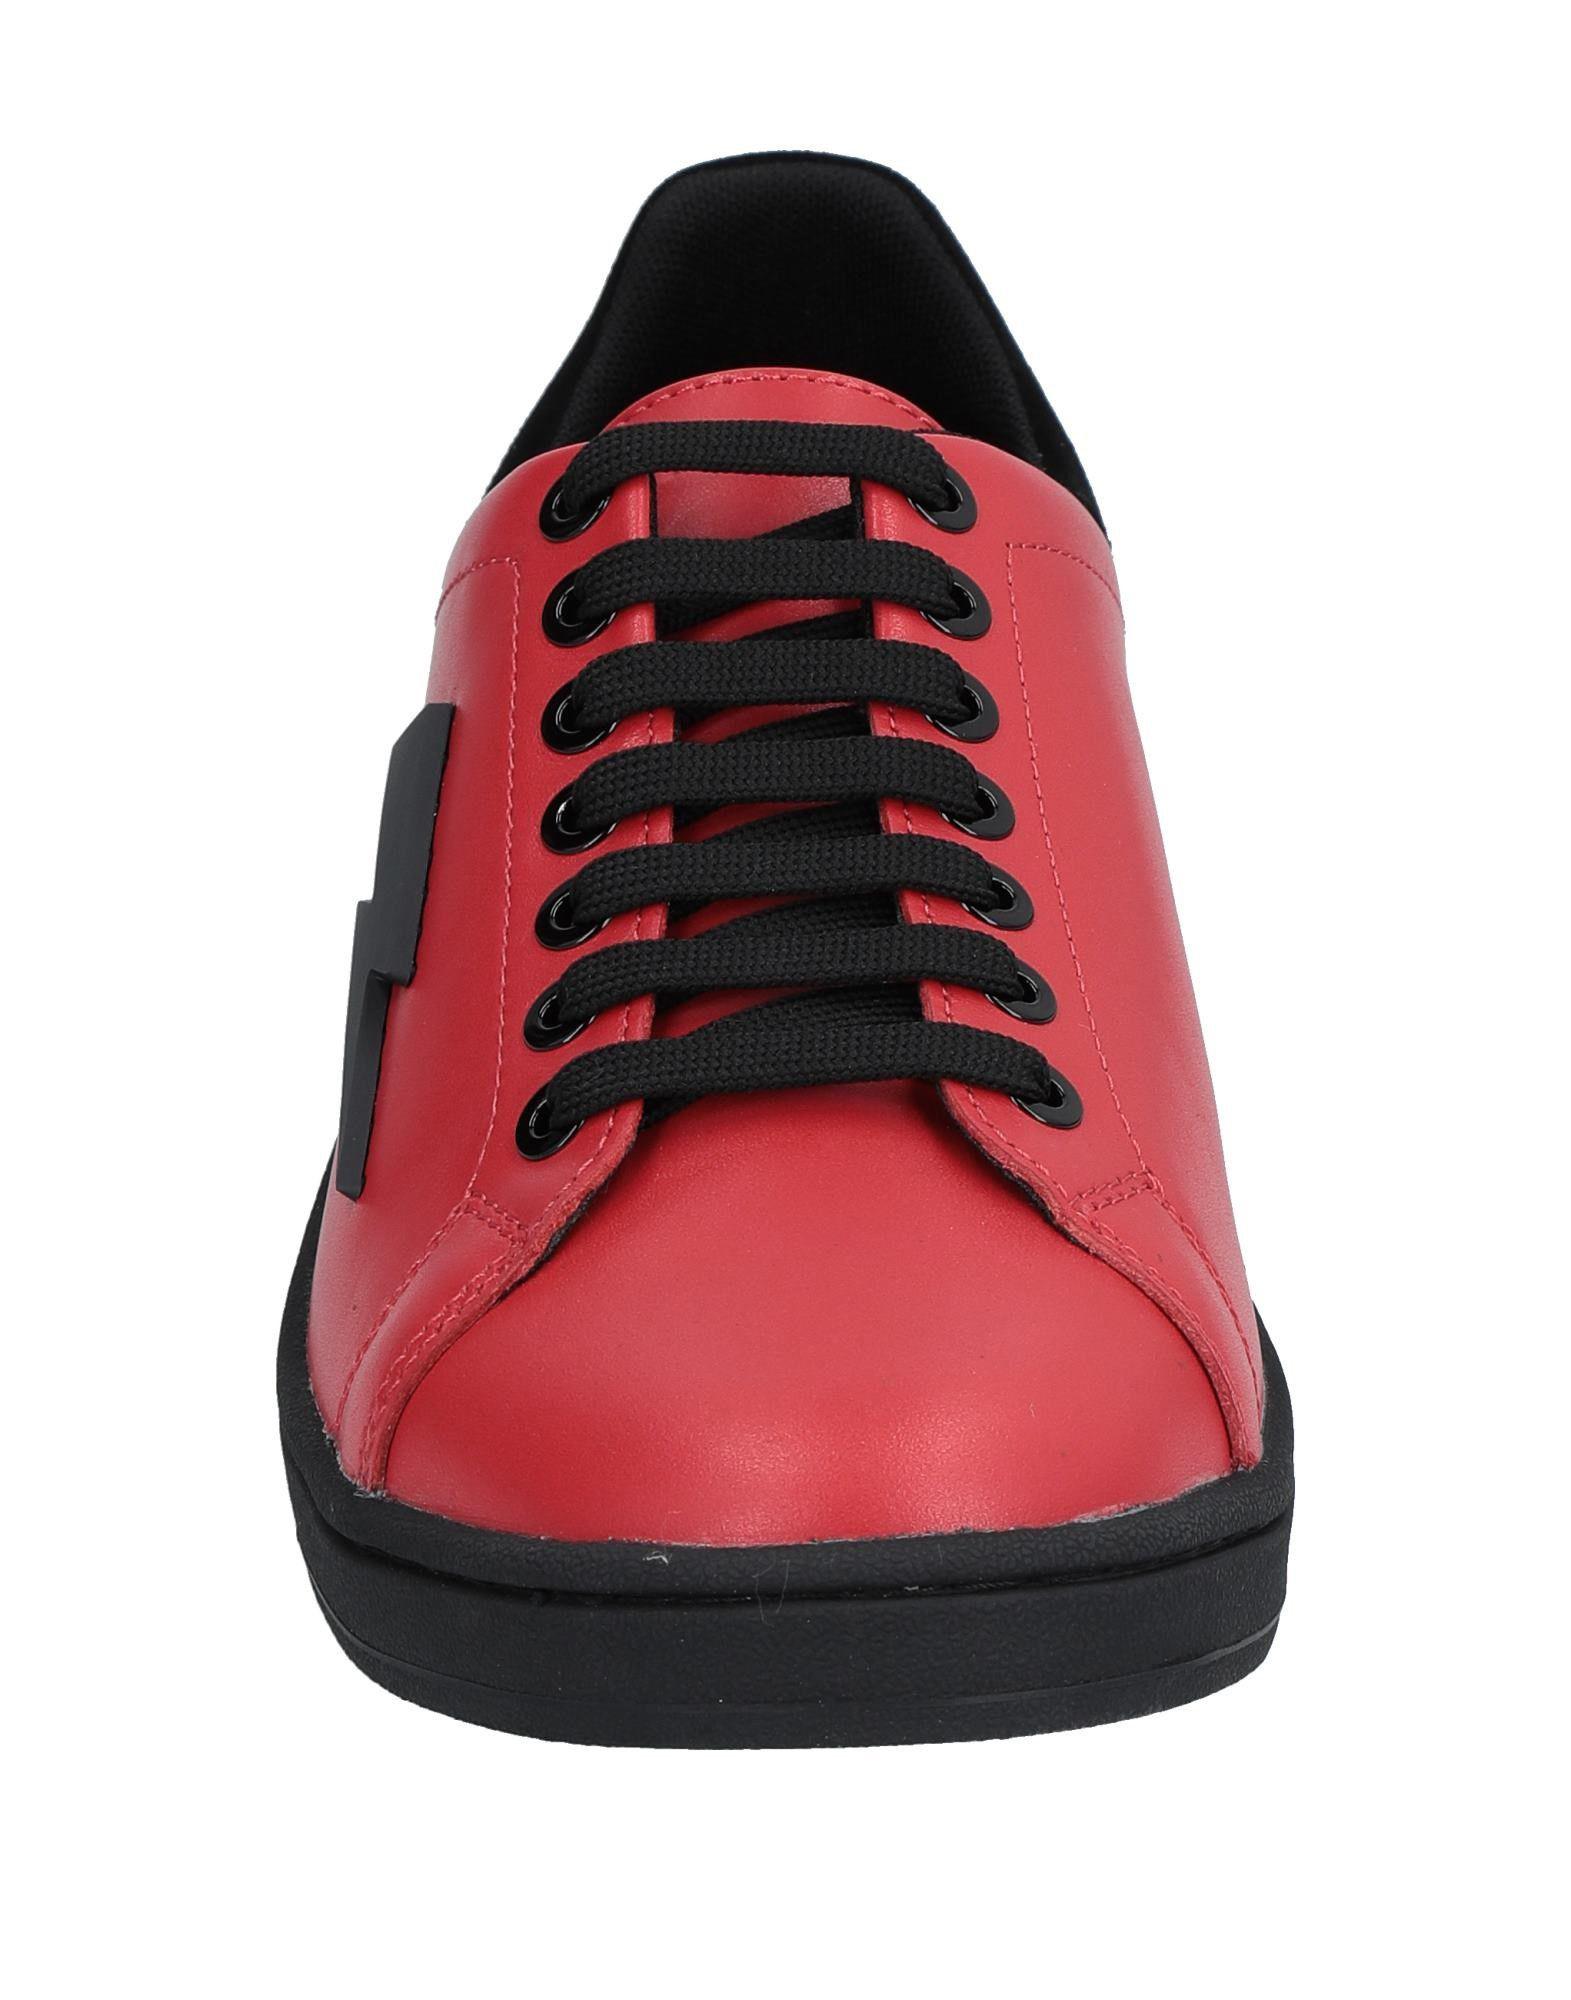 Neil Barrett Leather Low-tops & Sneakers in Red for Men - Lyst